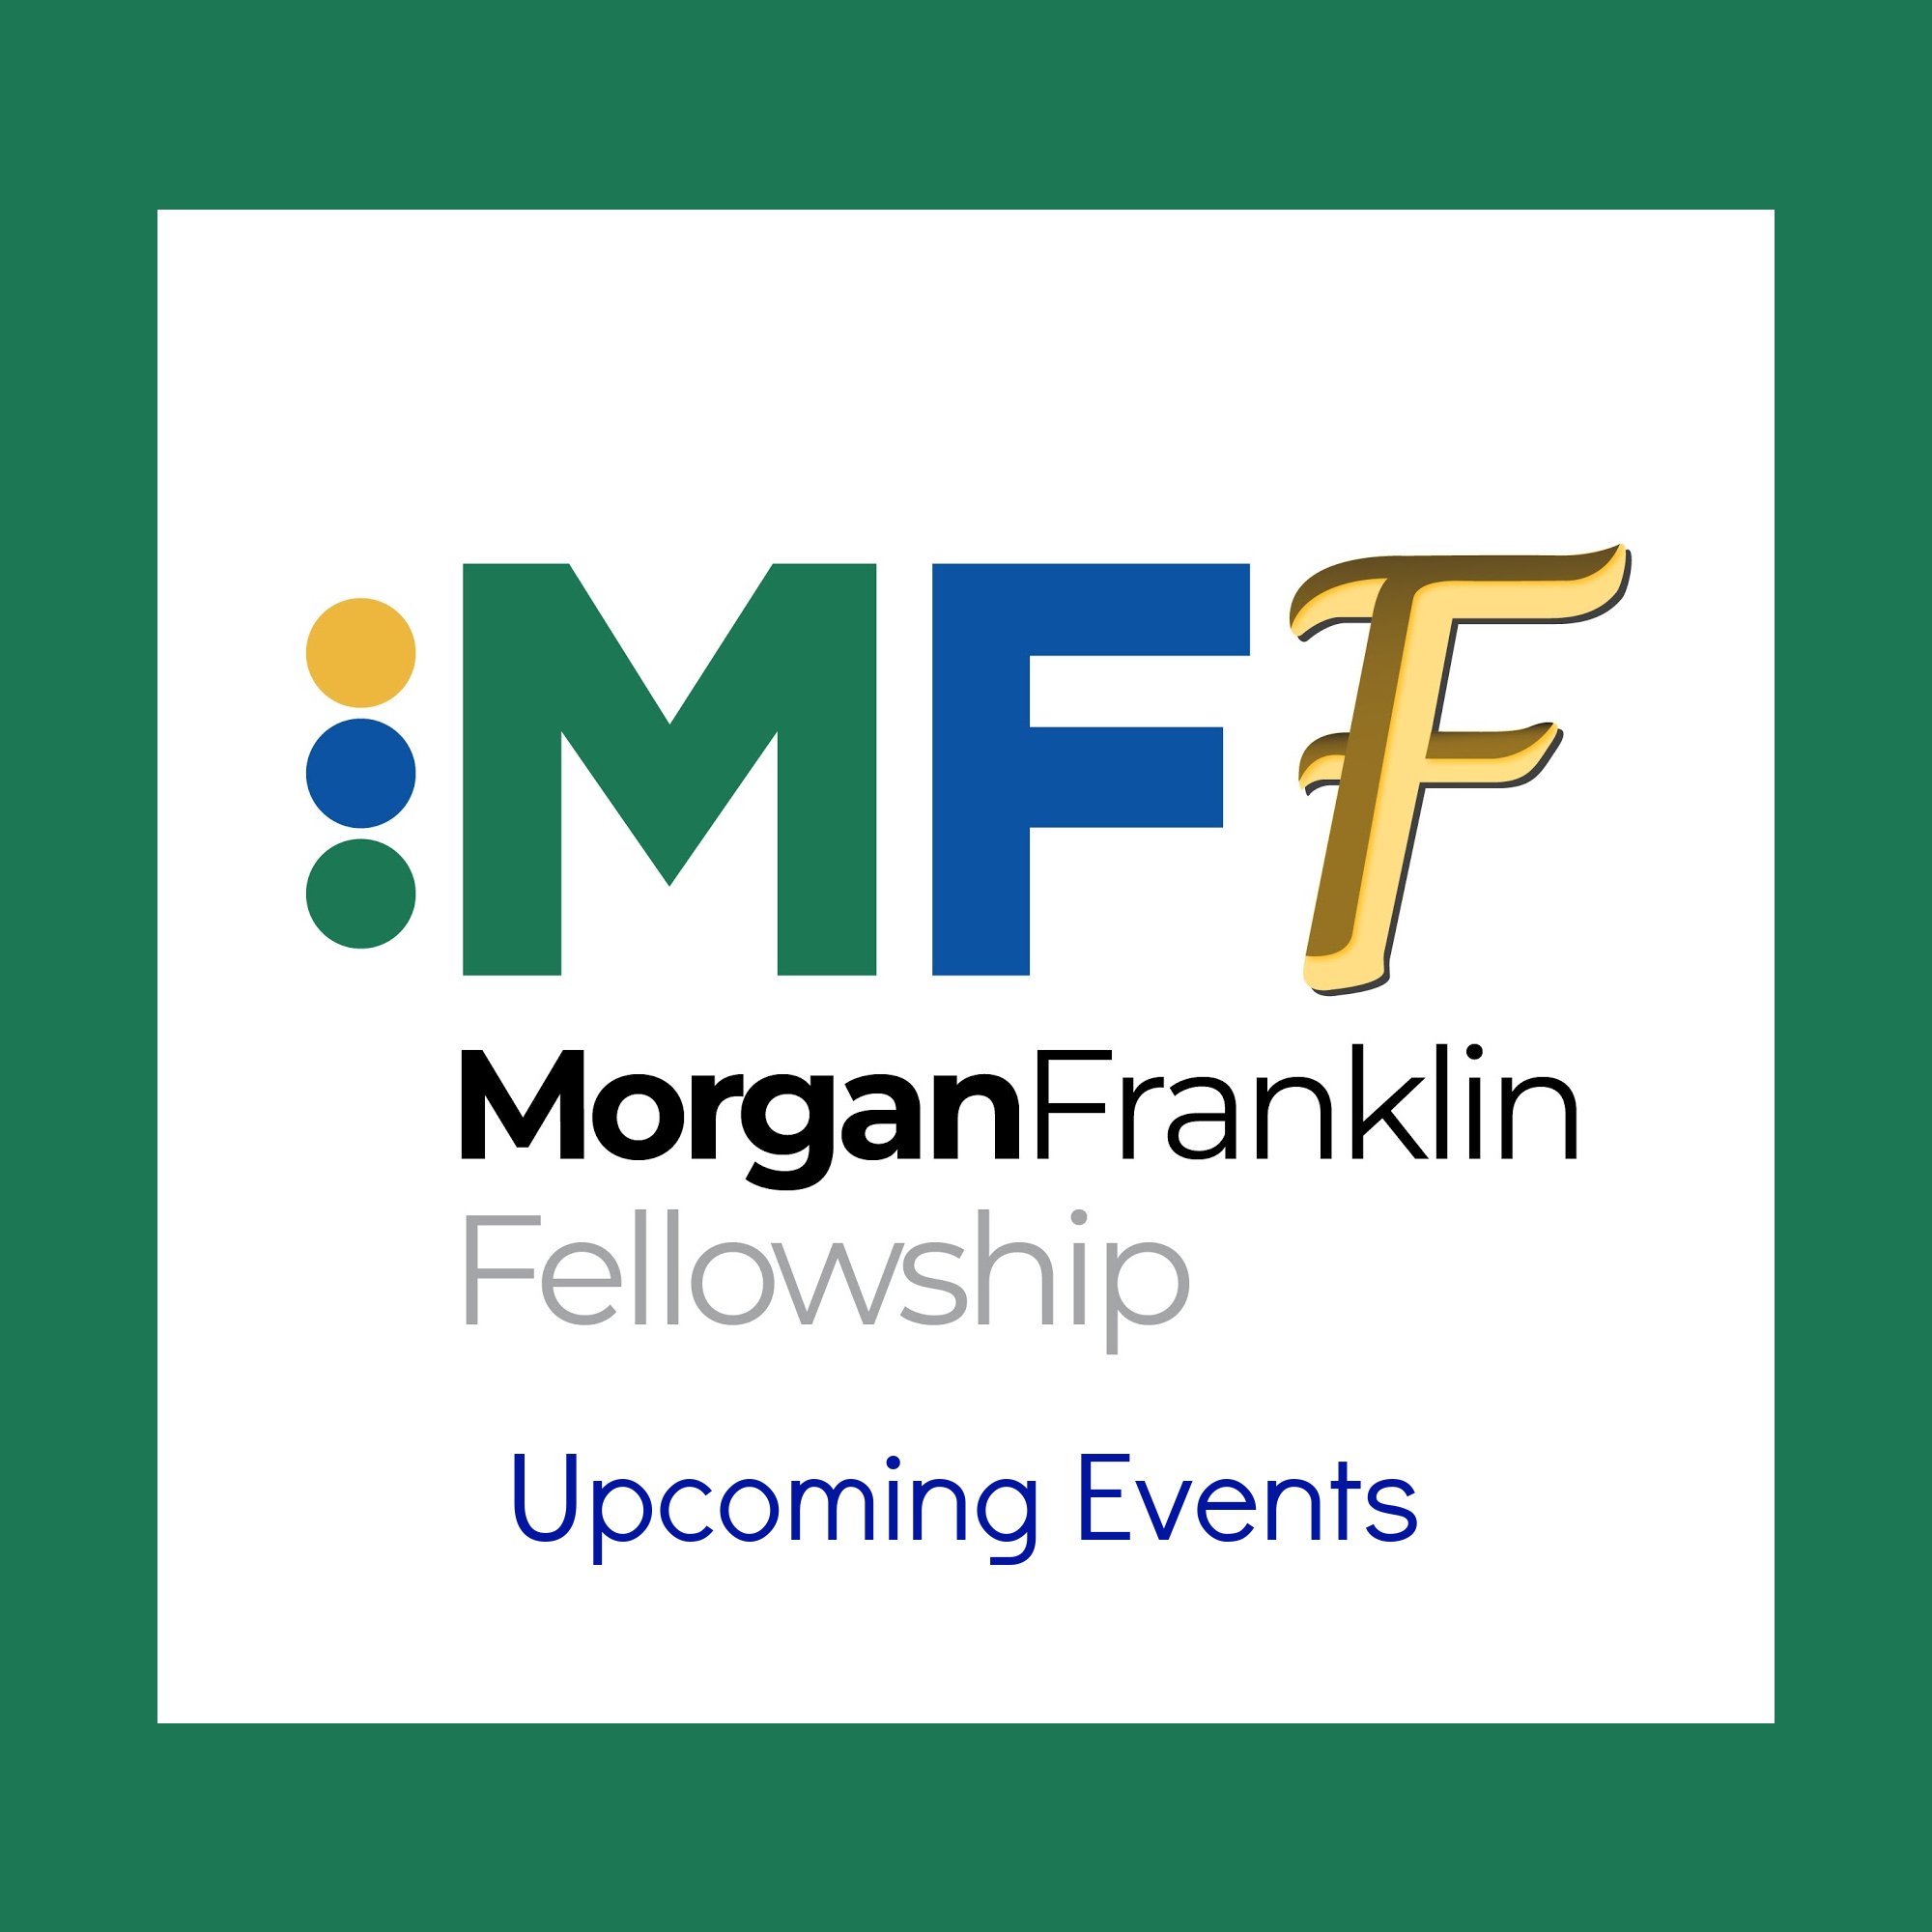 Morgan Franklin Fellowship Announces Three New Board Members